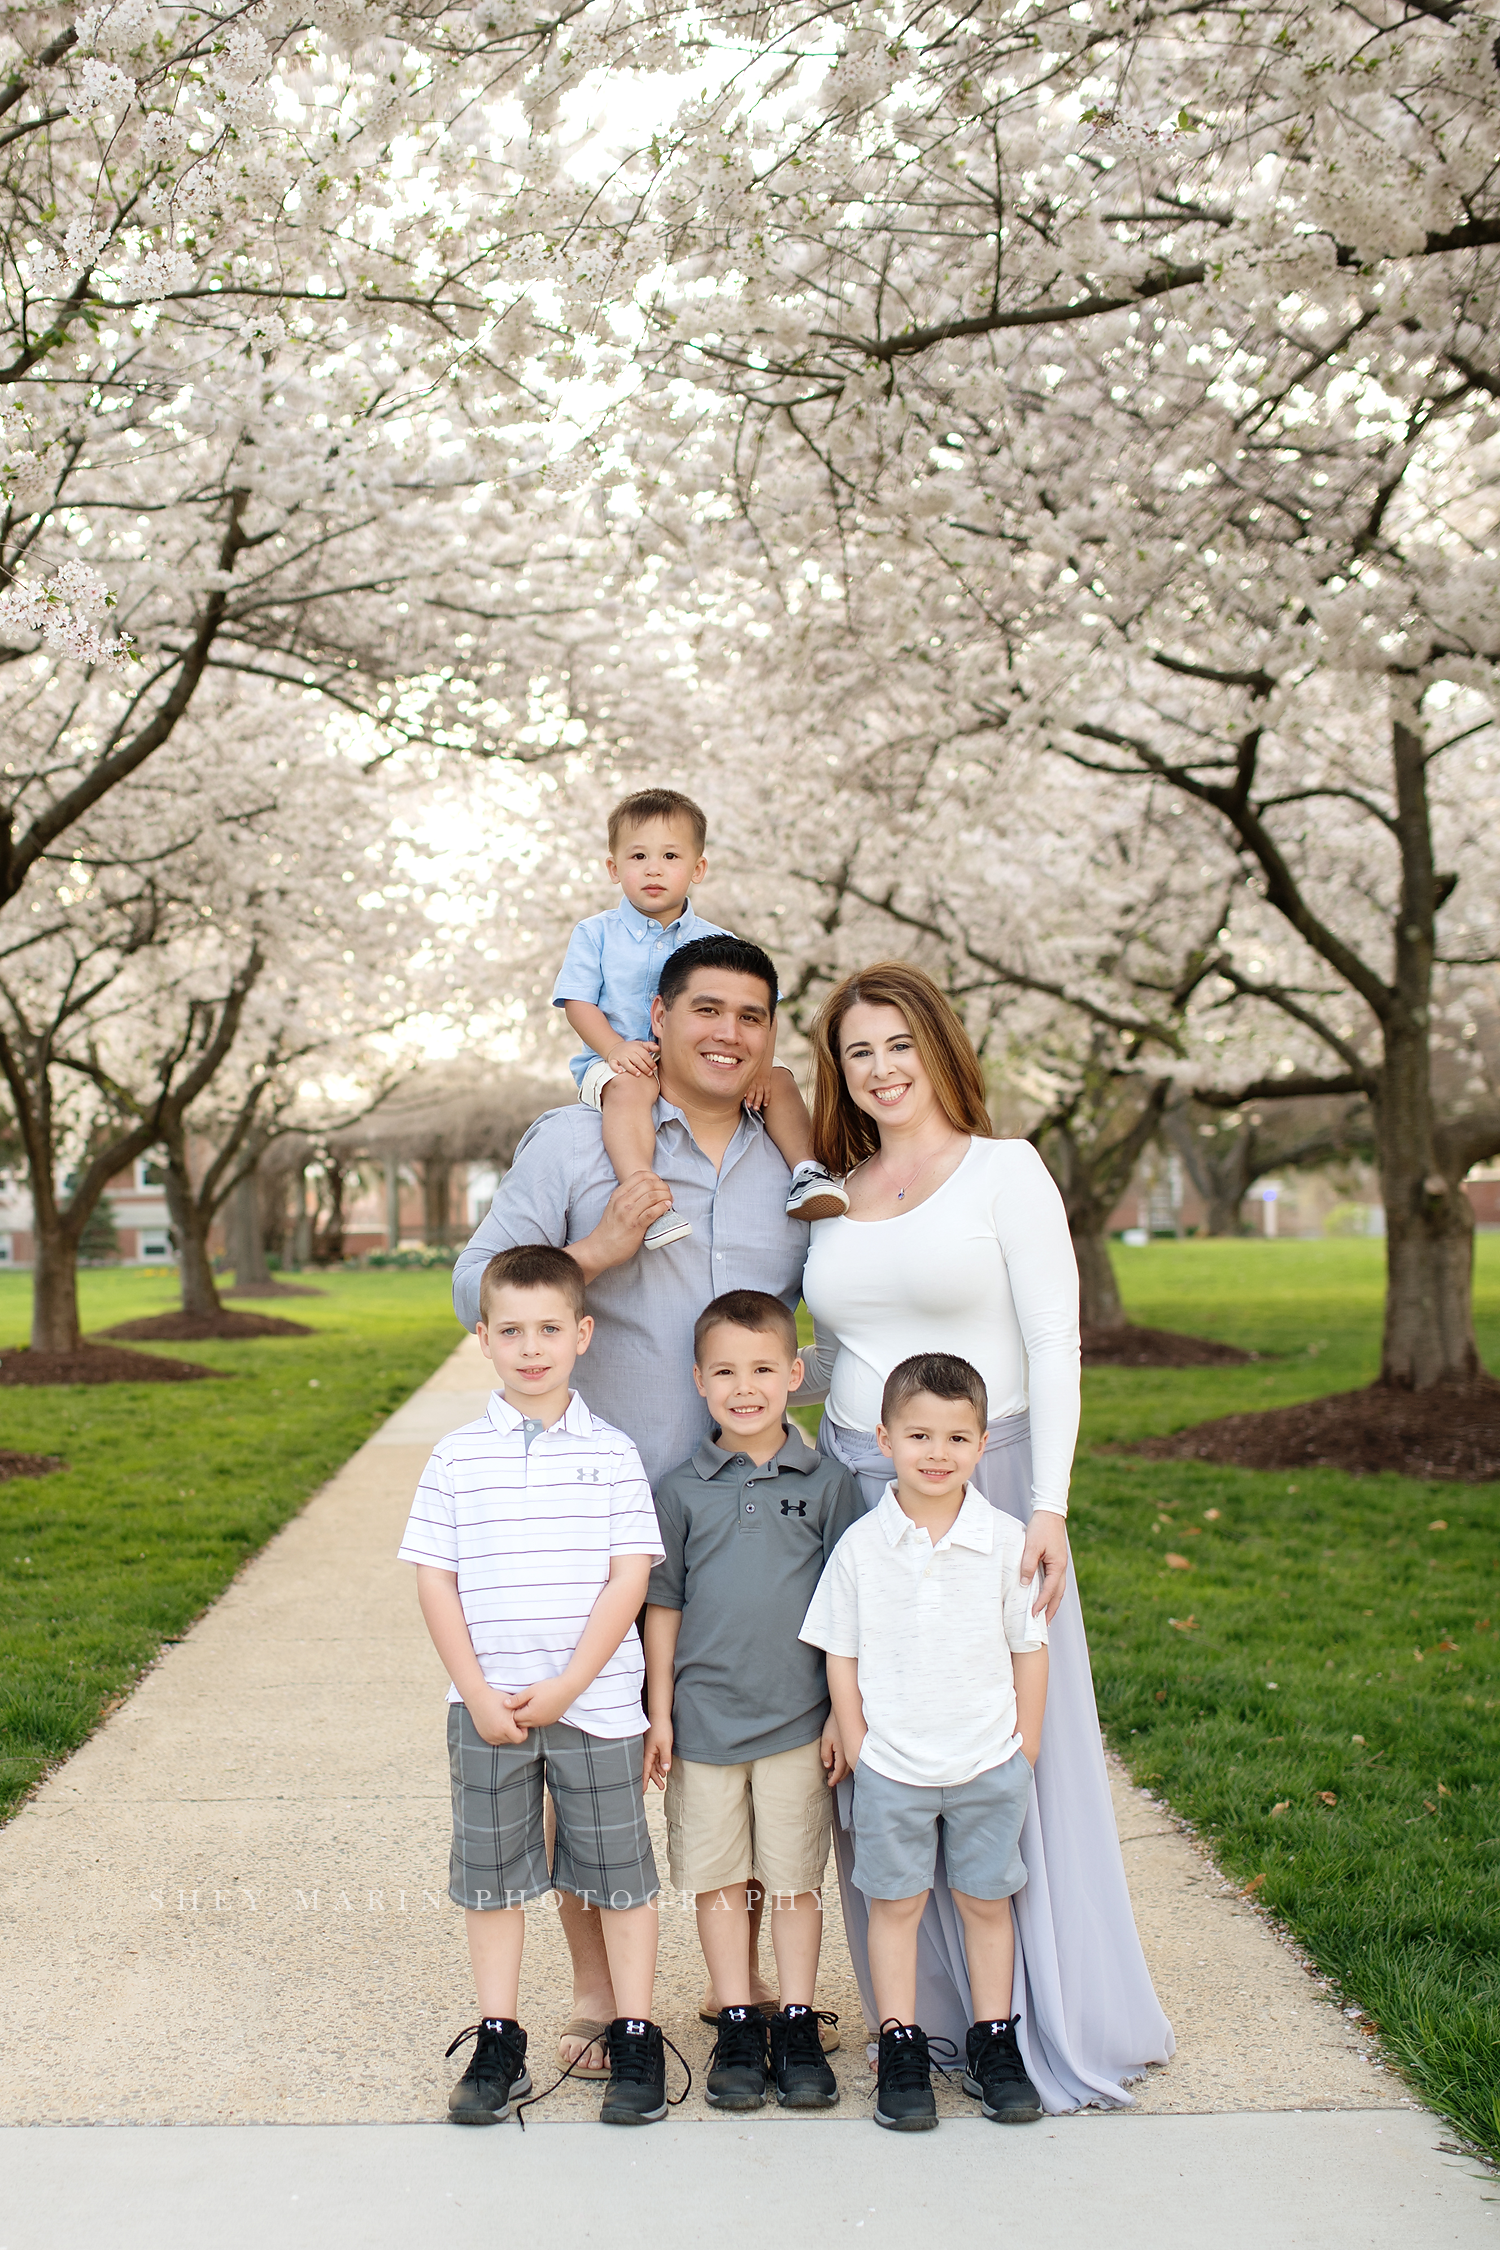 Spring cherry Frederick Maryland family photographer